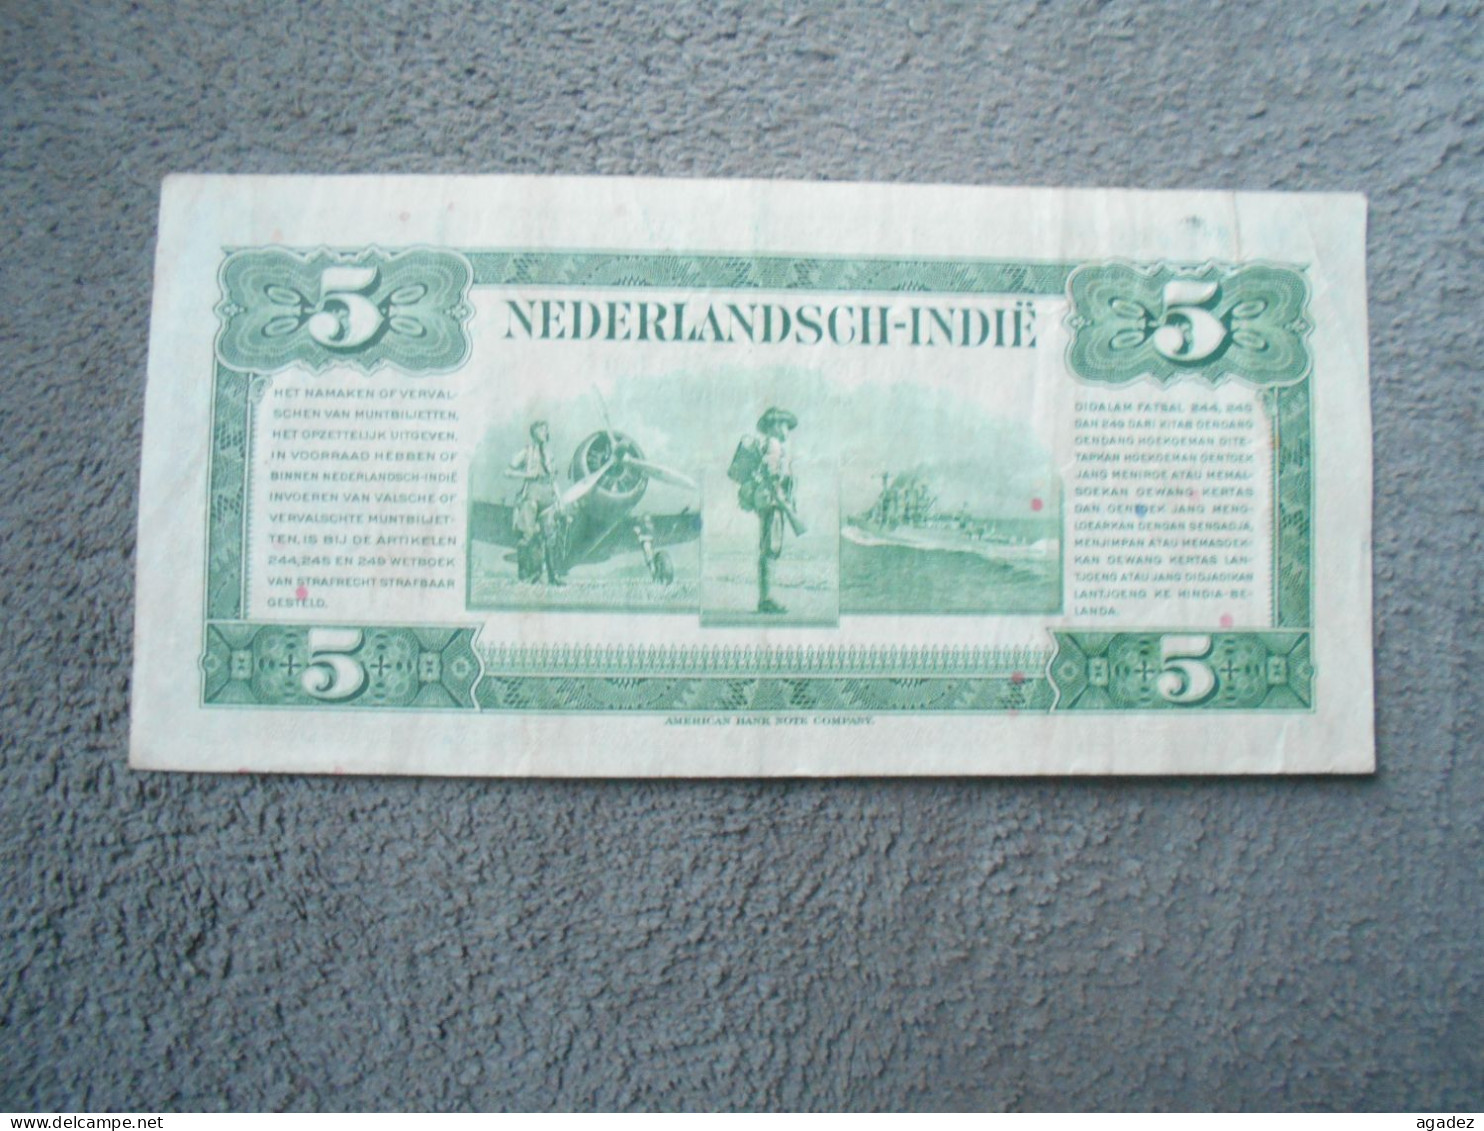 Ancien Billet De Banque Nederlandsch Indie Indes Neerlandaises  5 Gulden 1943 - Inde